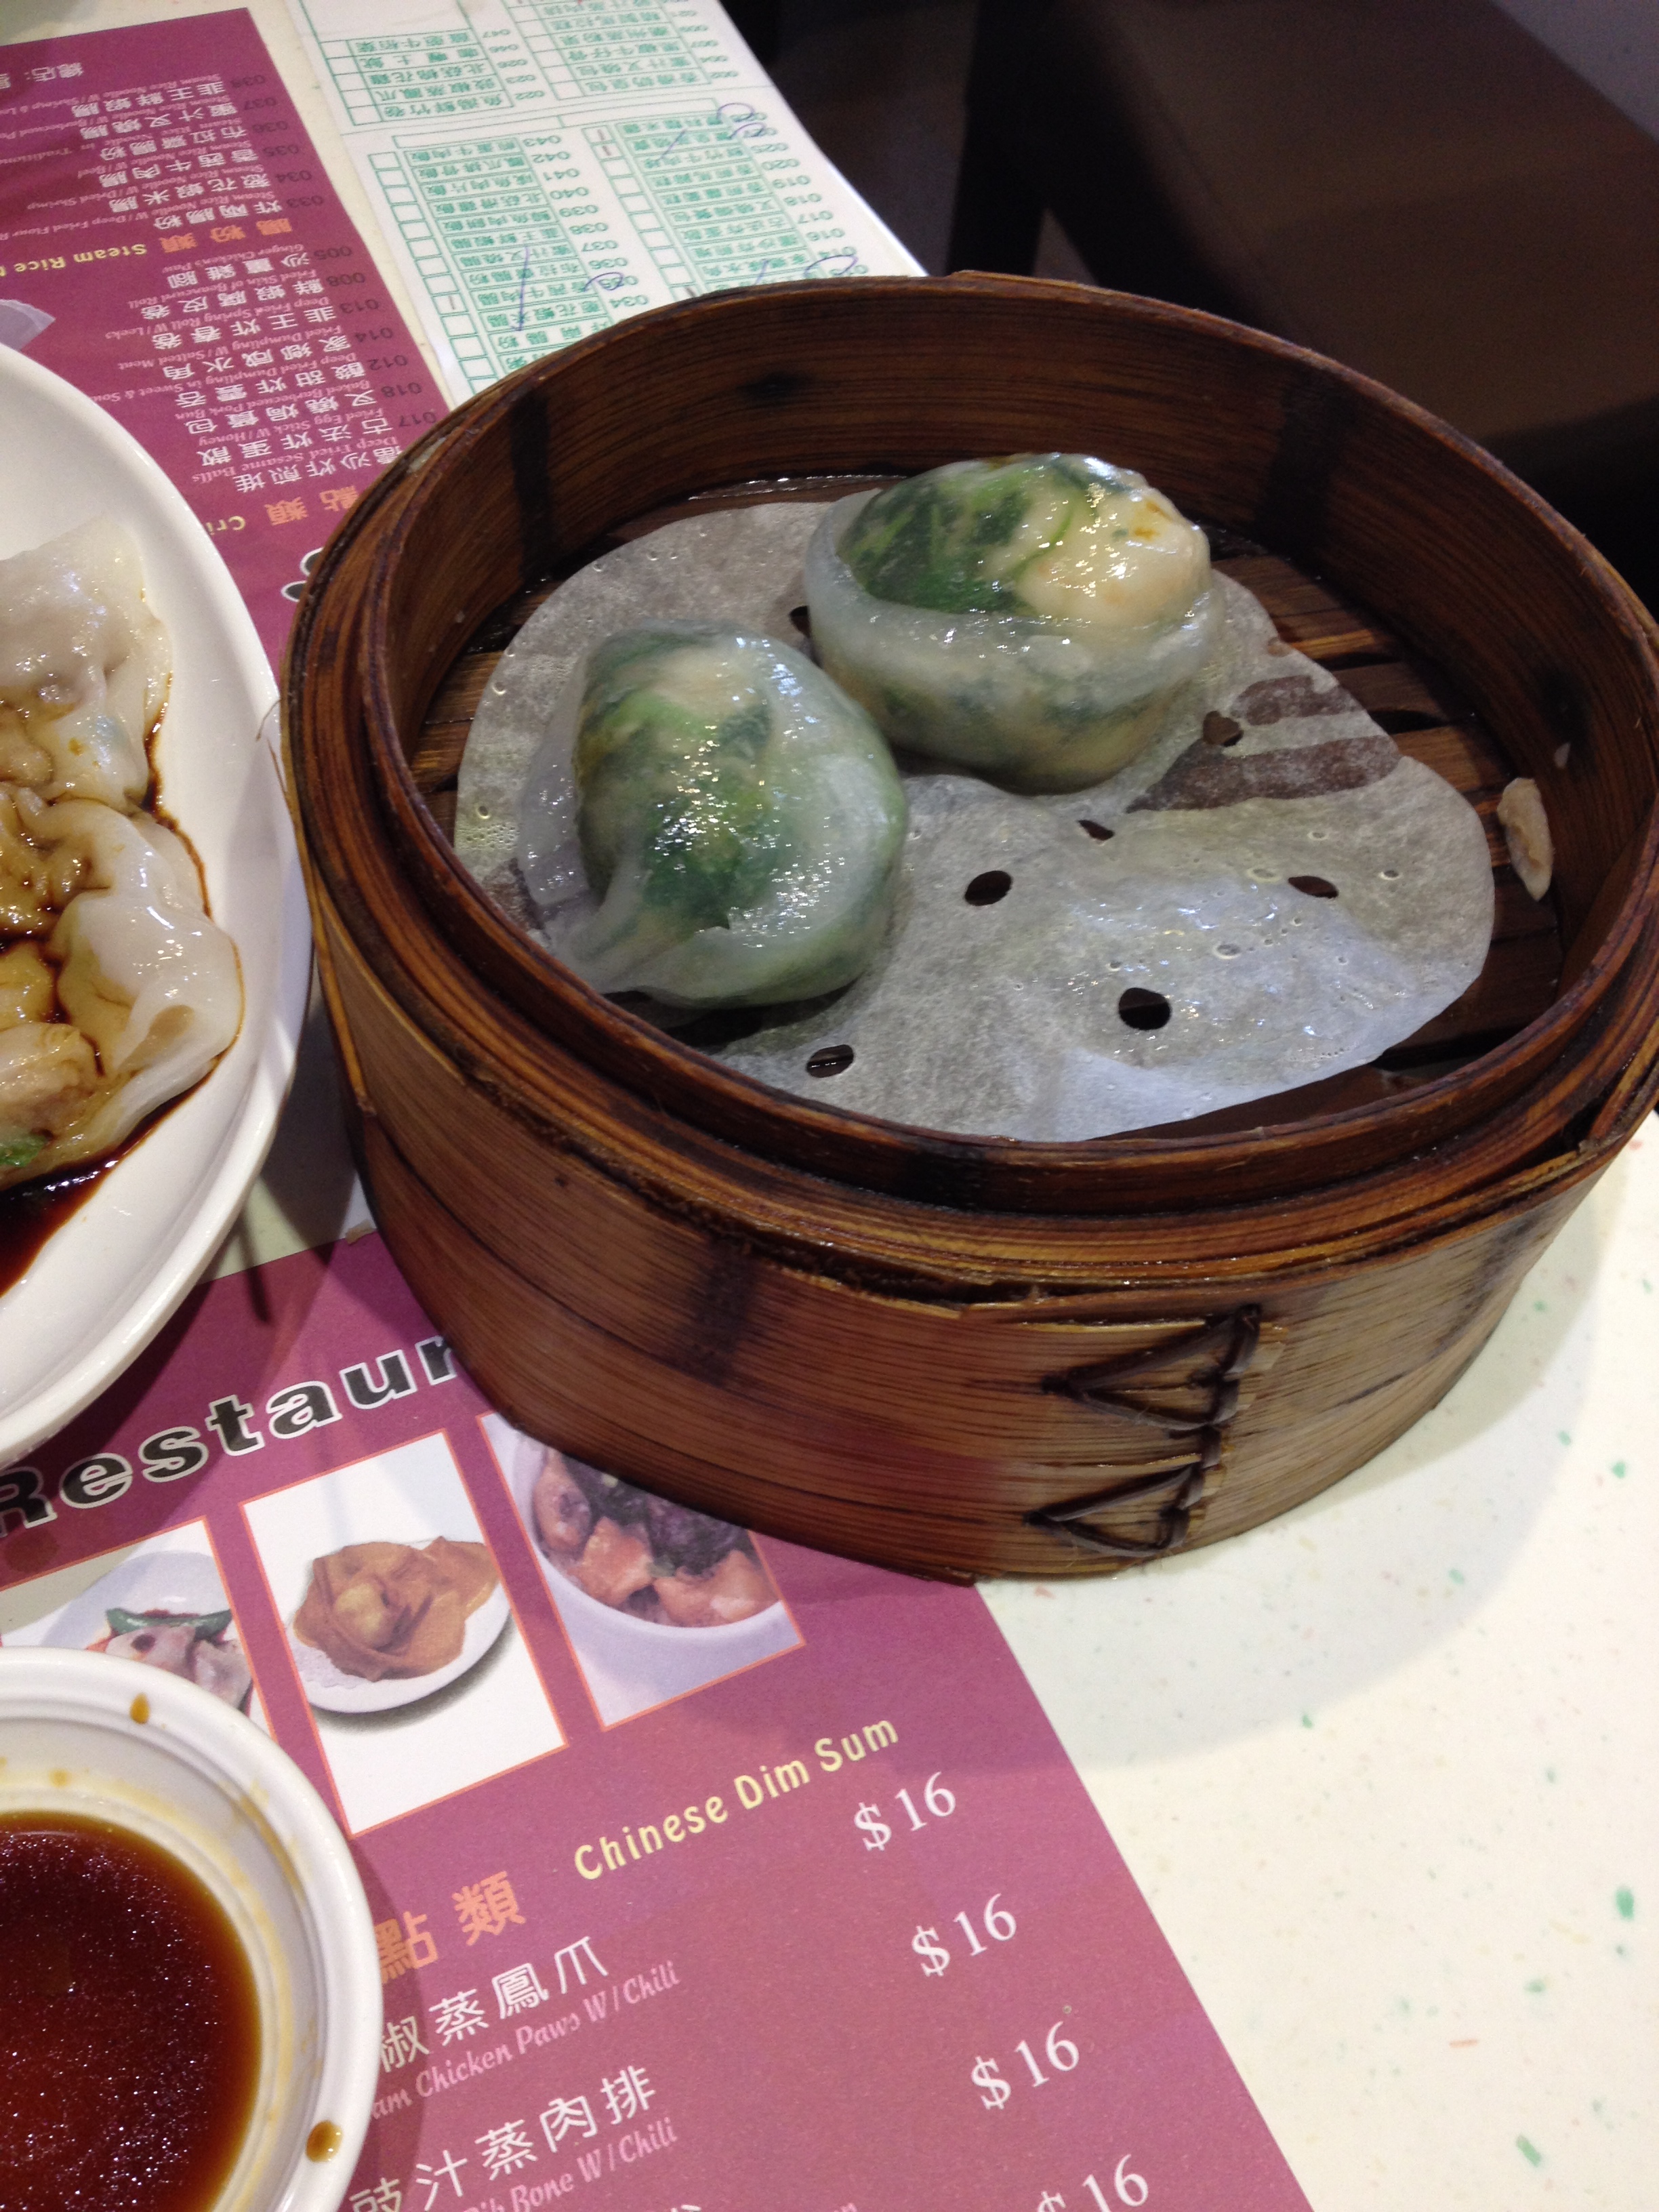 Dumplings at One Dim Sum, Kowloon